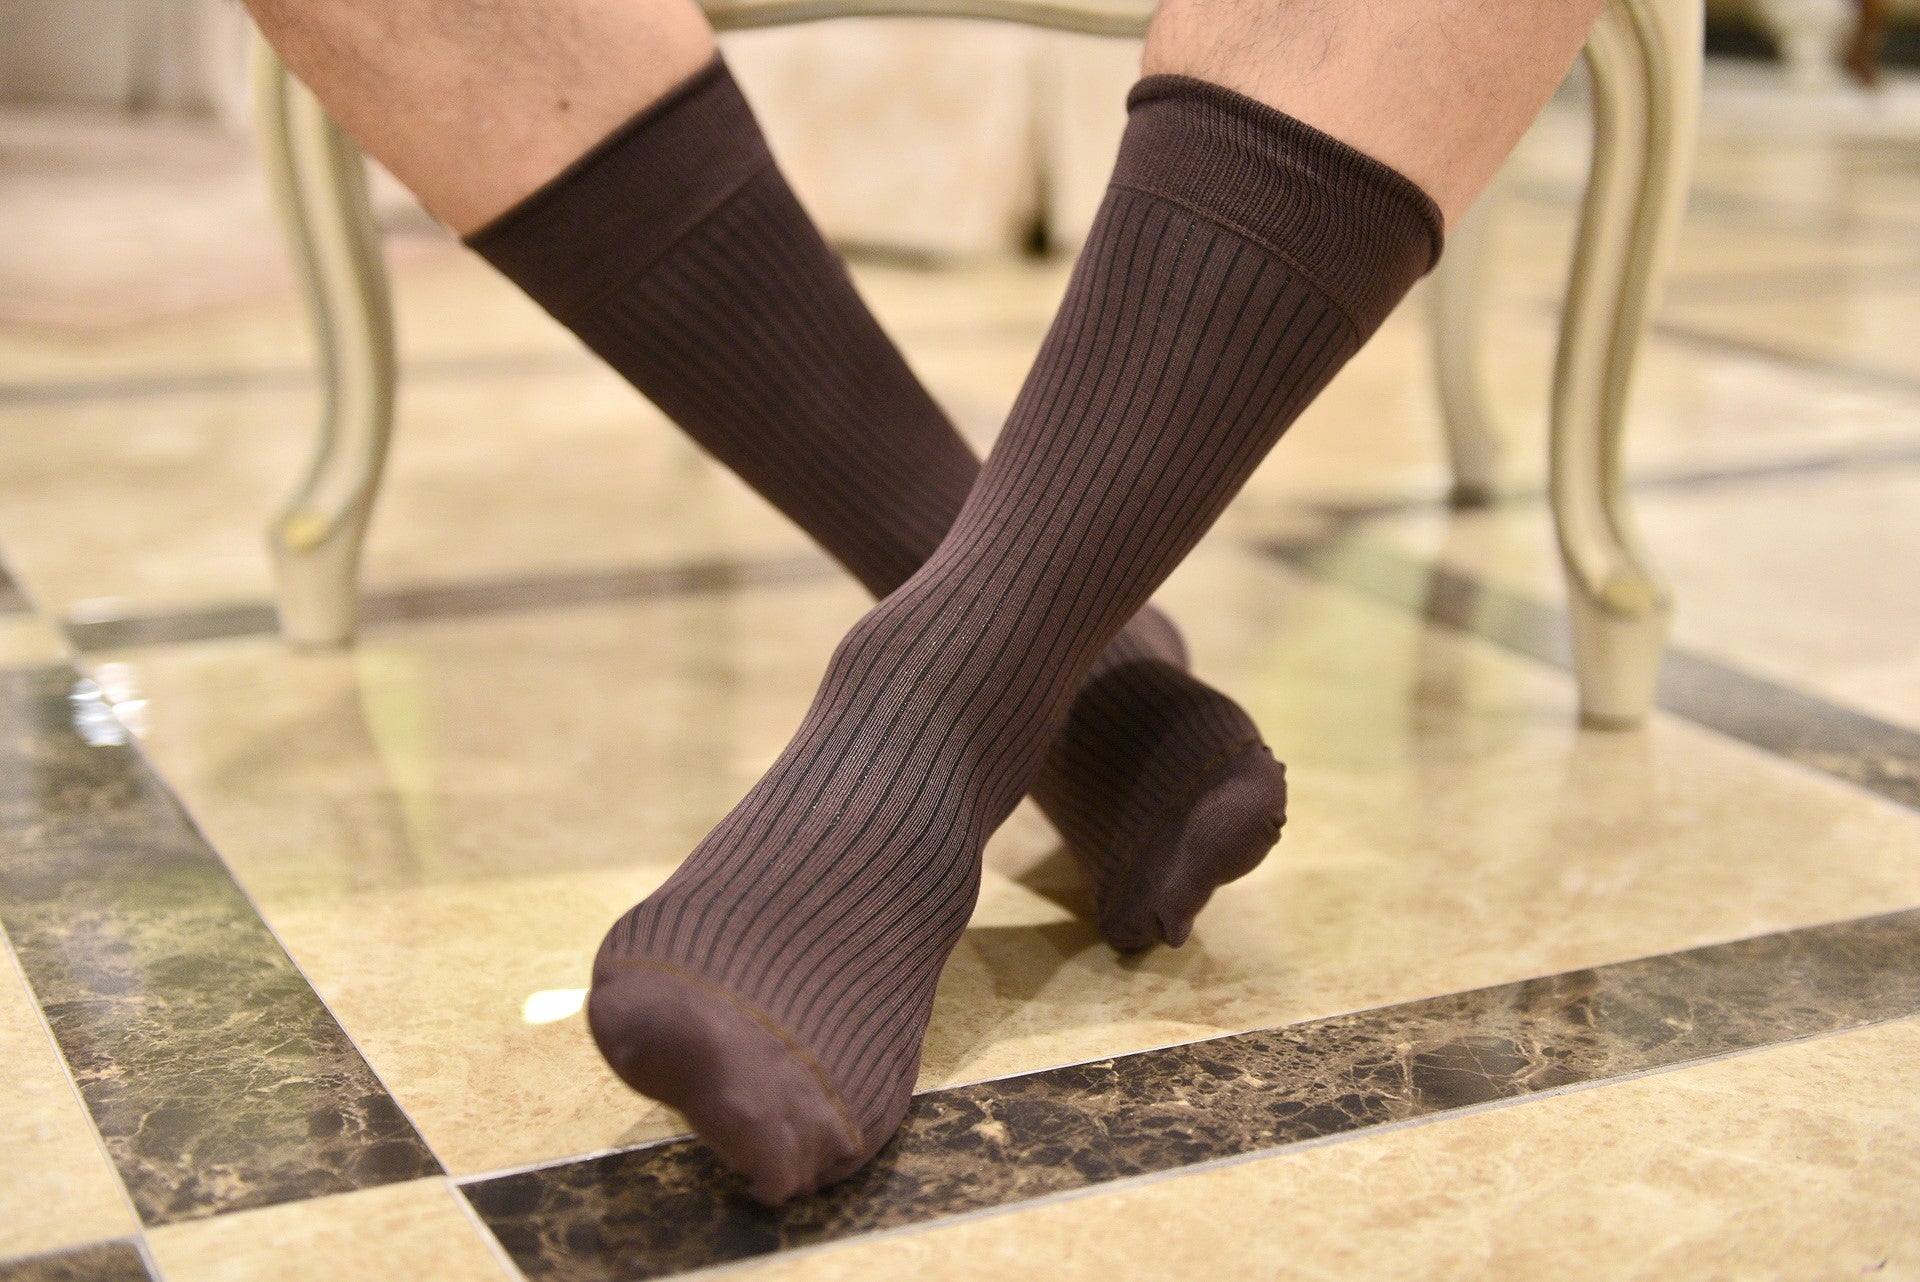 Men's Ribs Socks - Color Brown